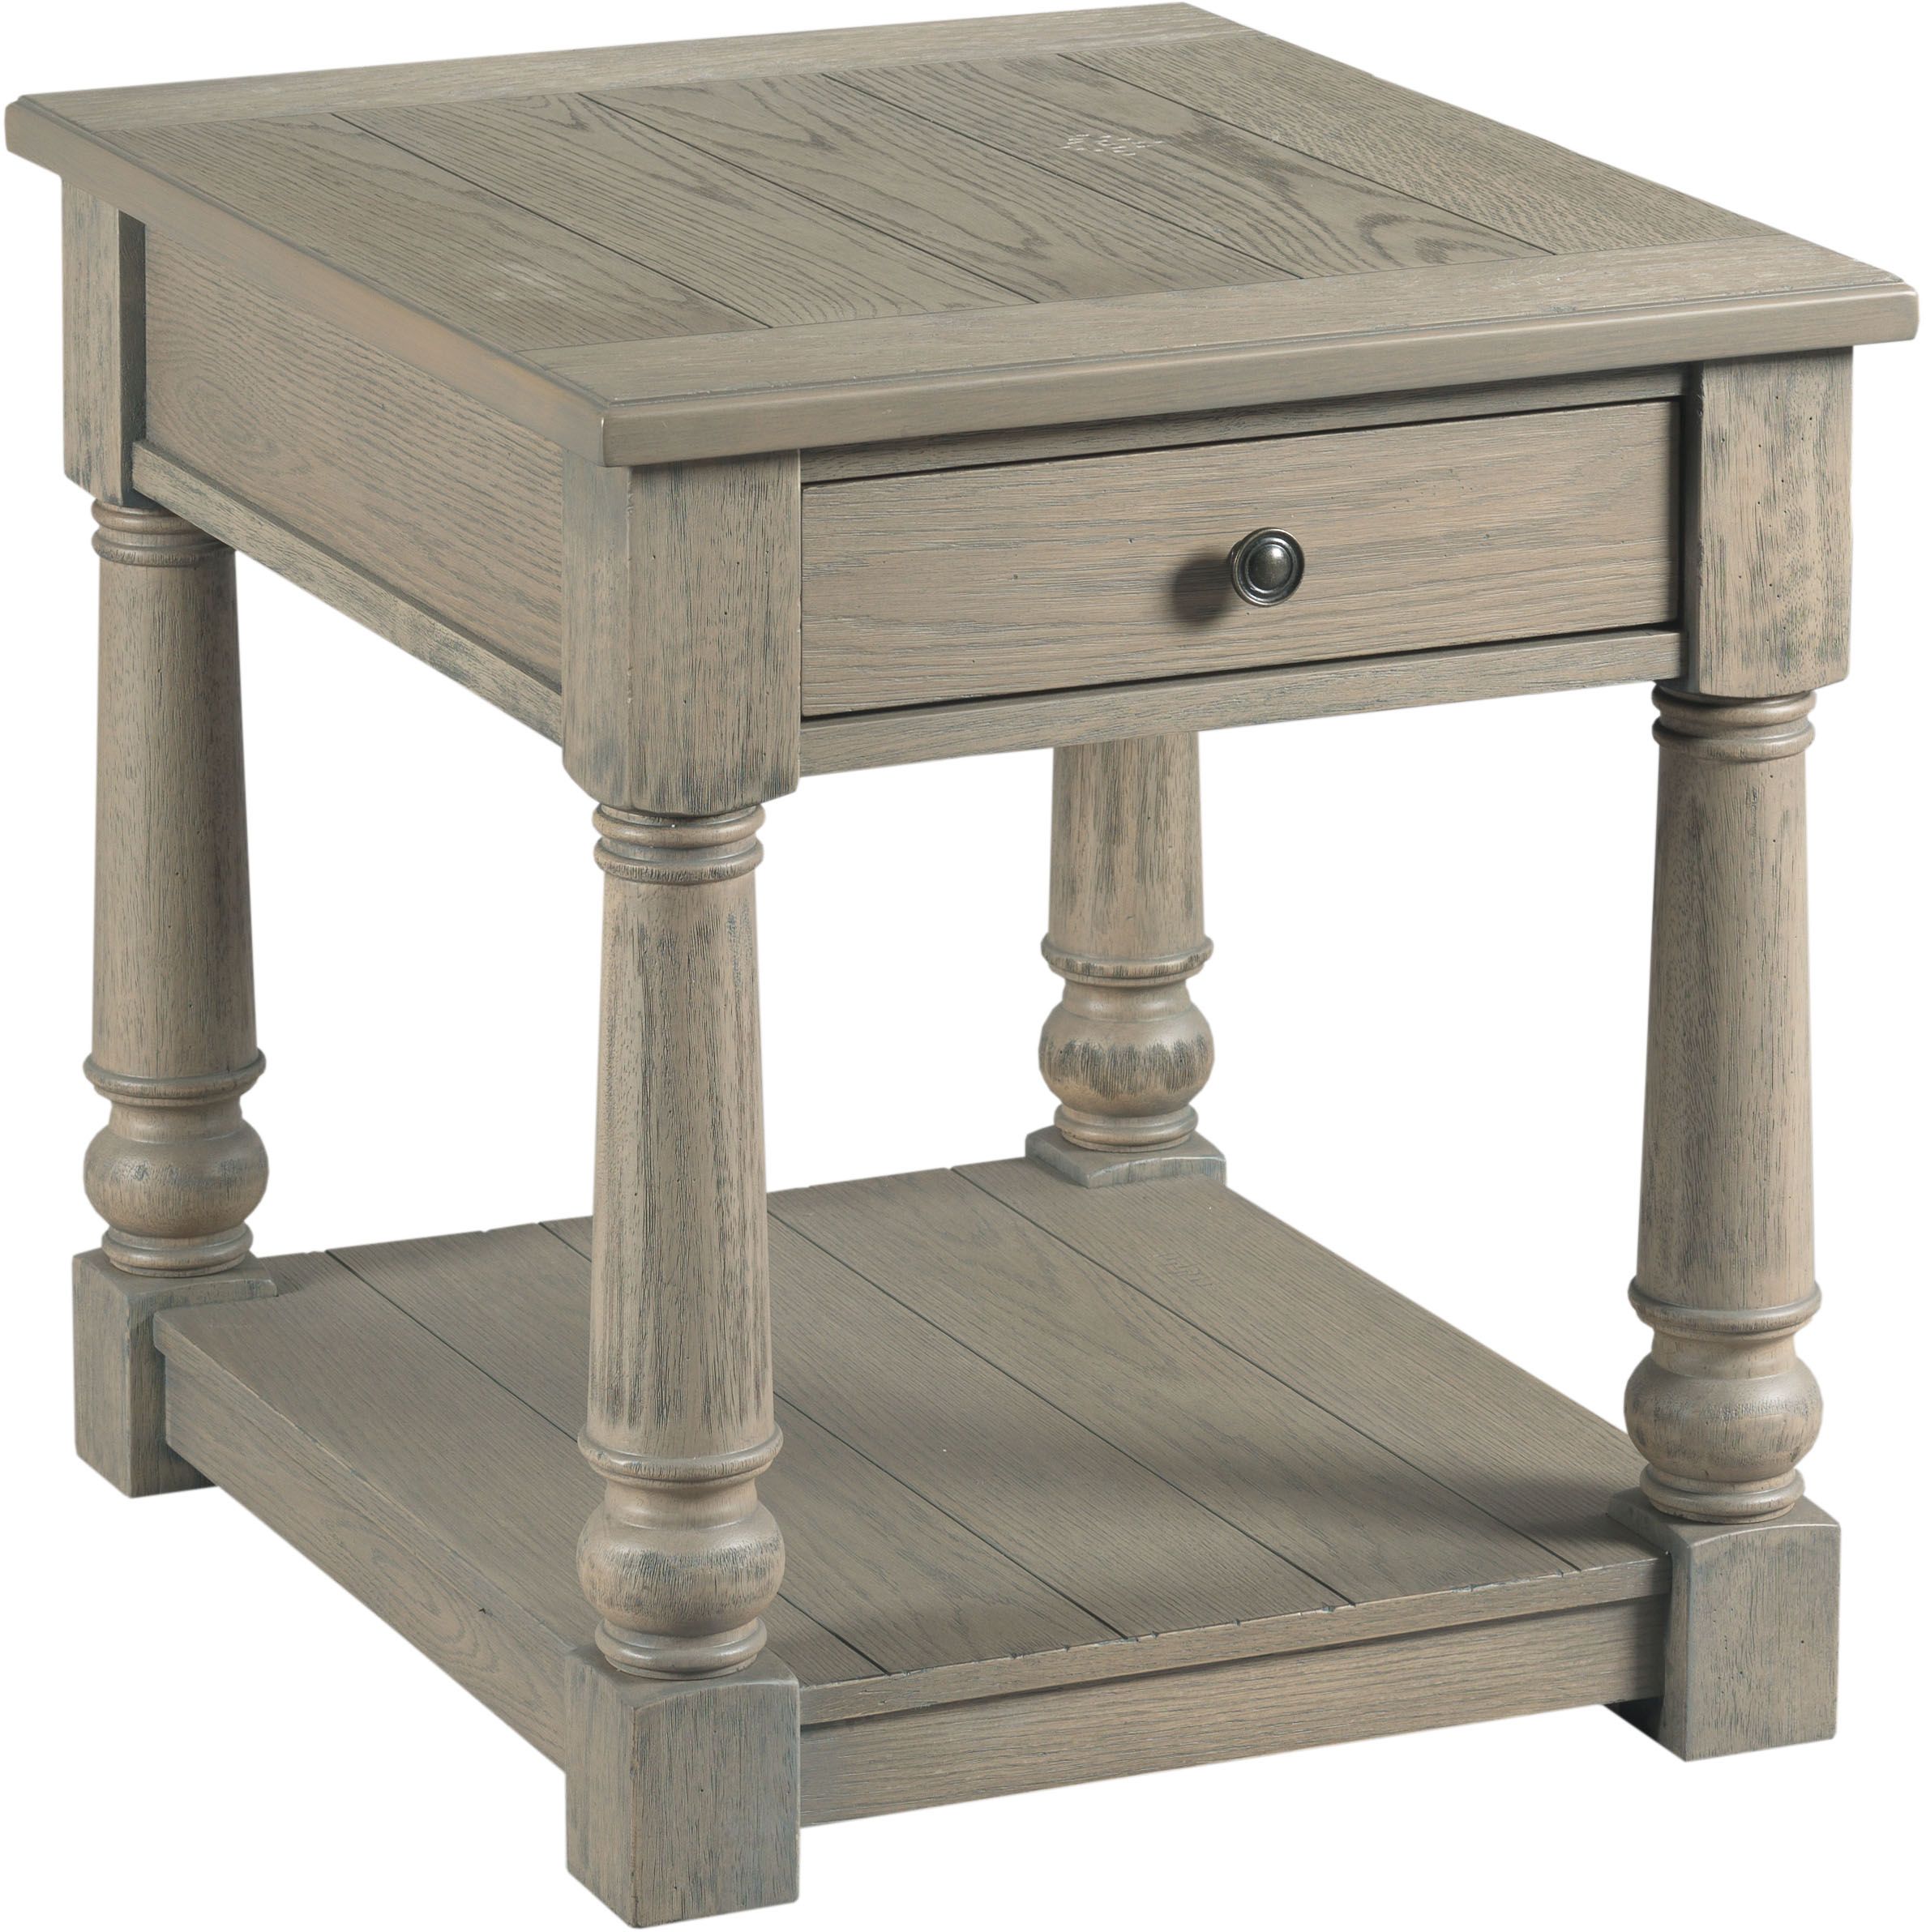 England Furniture Outland Rectangular End Table-H718915